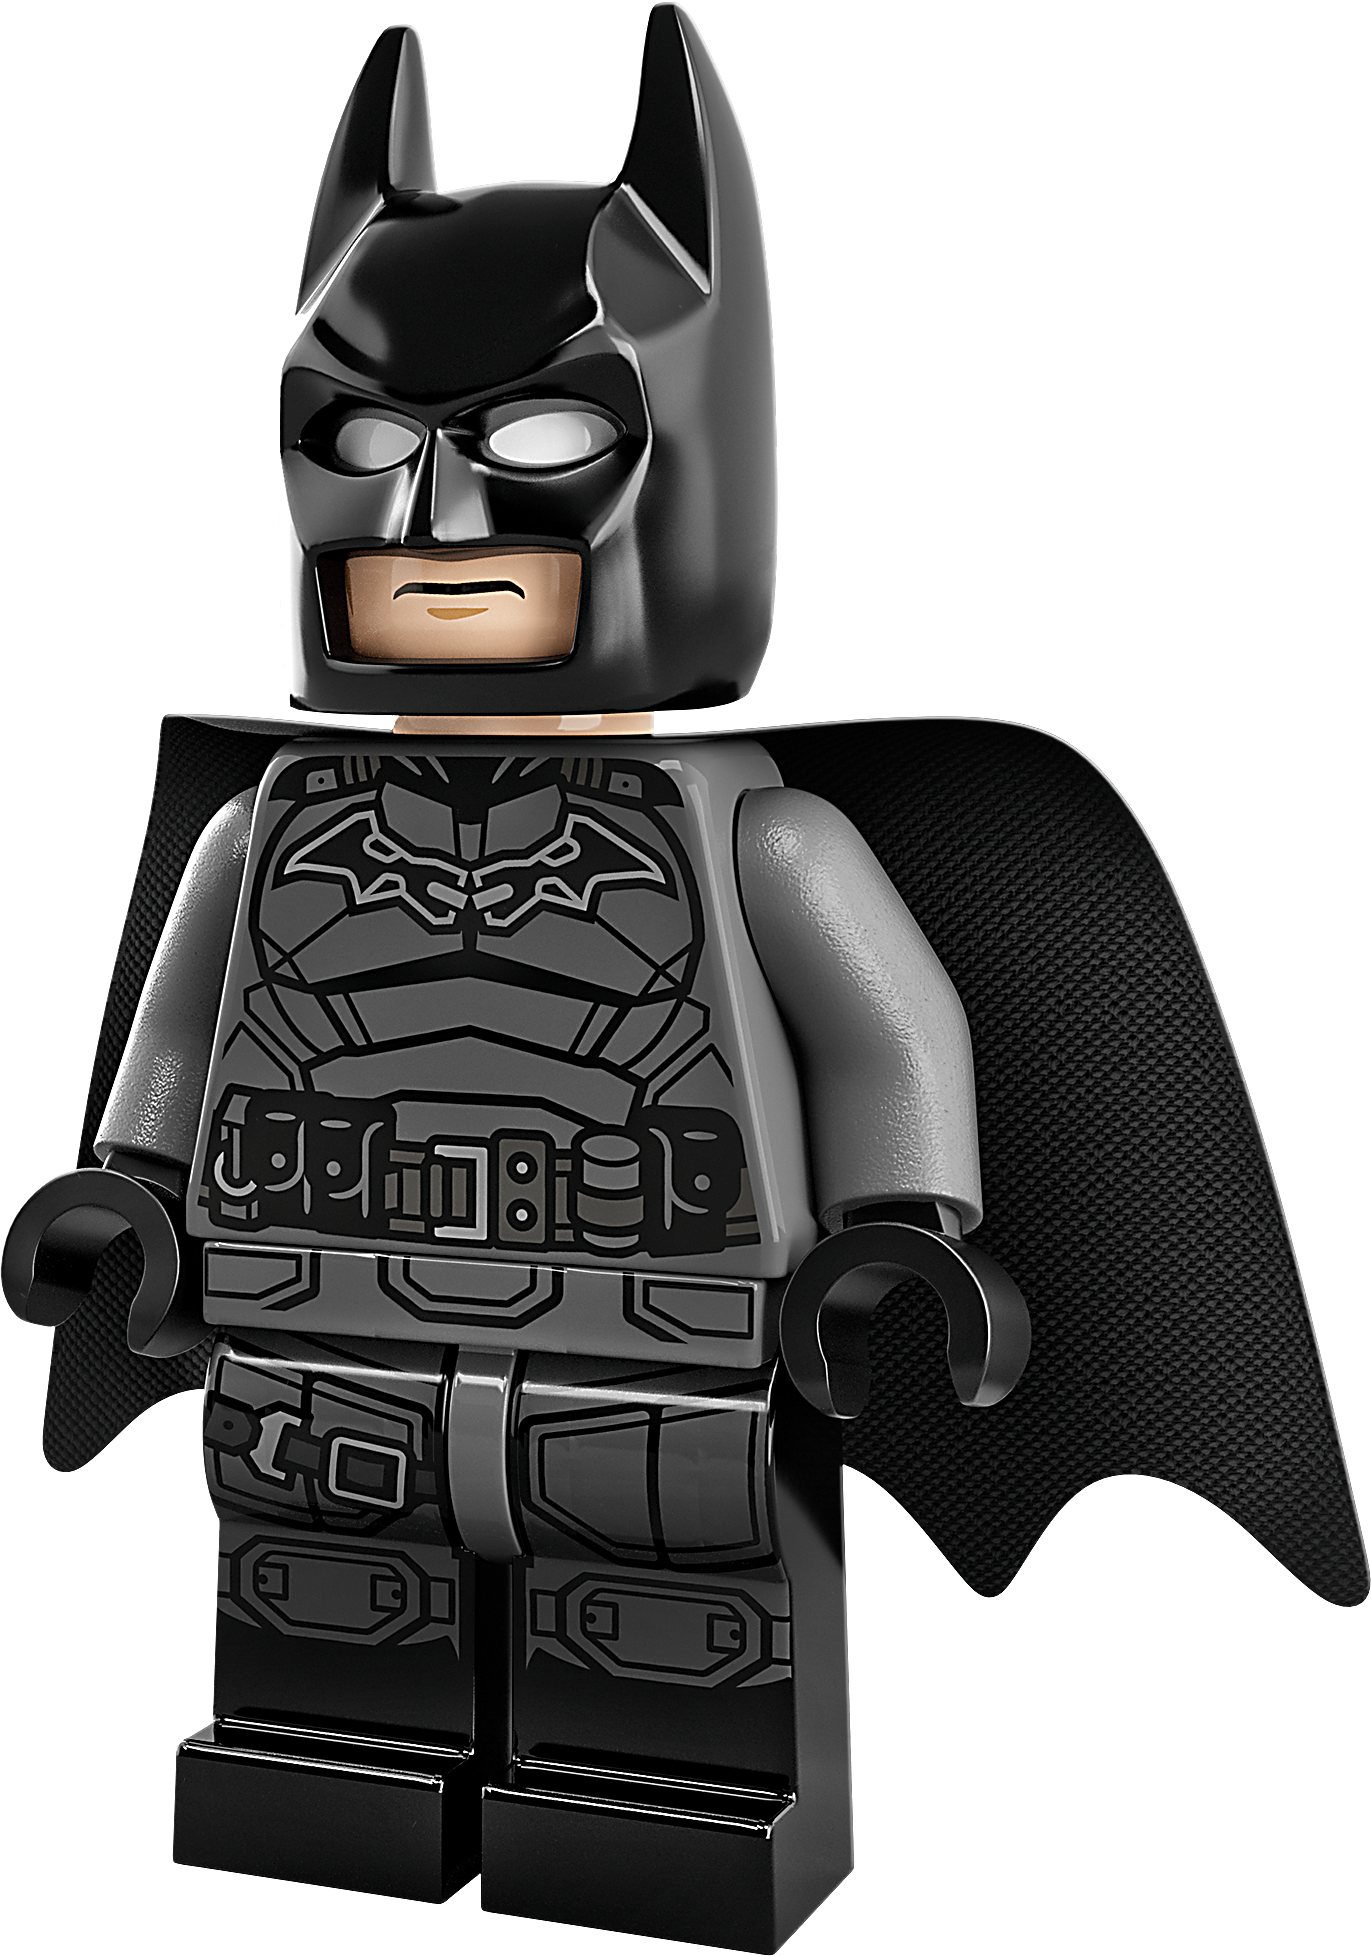 NEW Lego Batman Movie Batman Minifigure from set 70917 FREE 1st Class Postage 